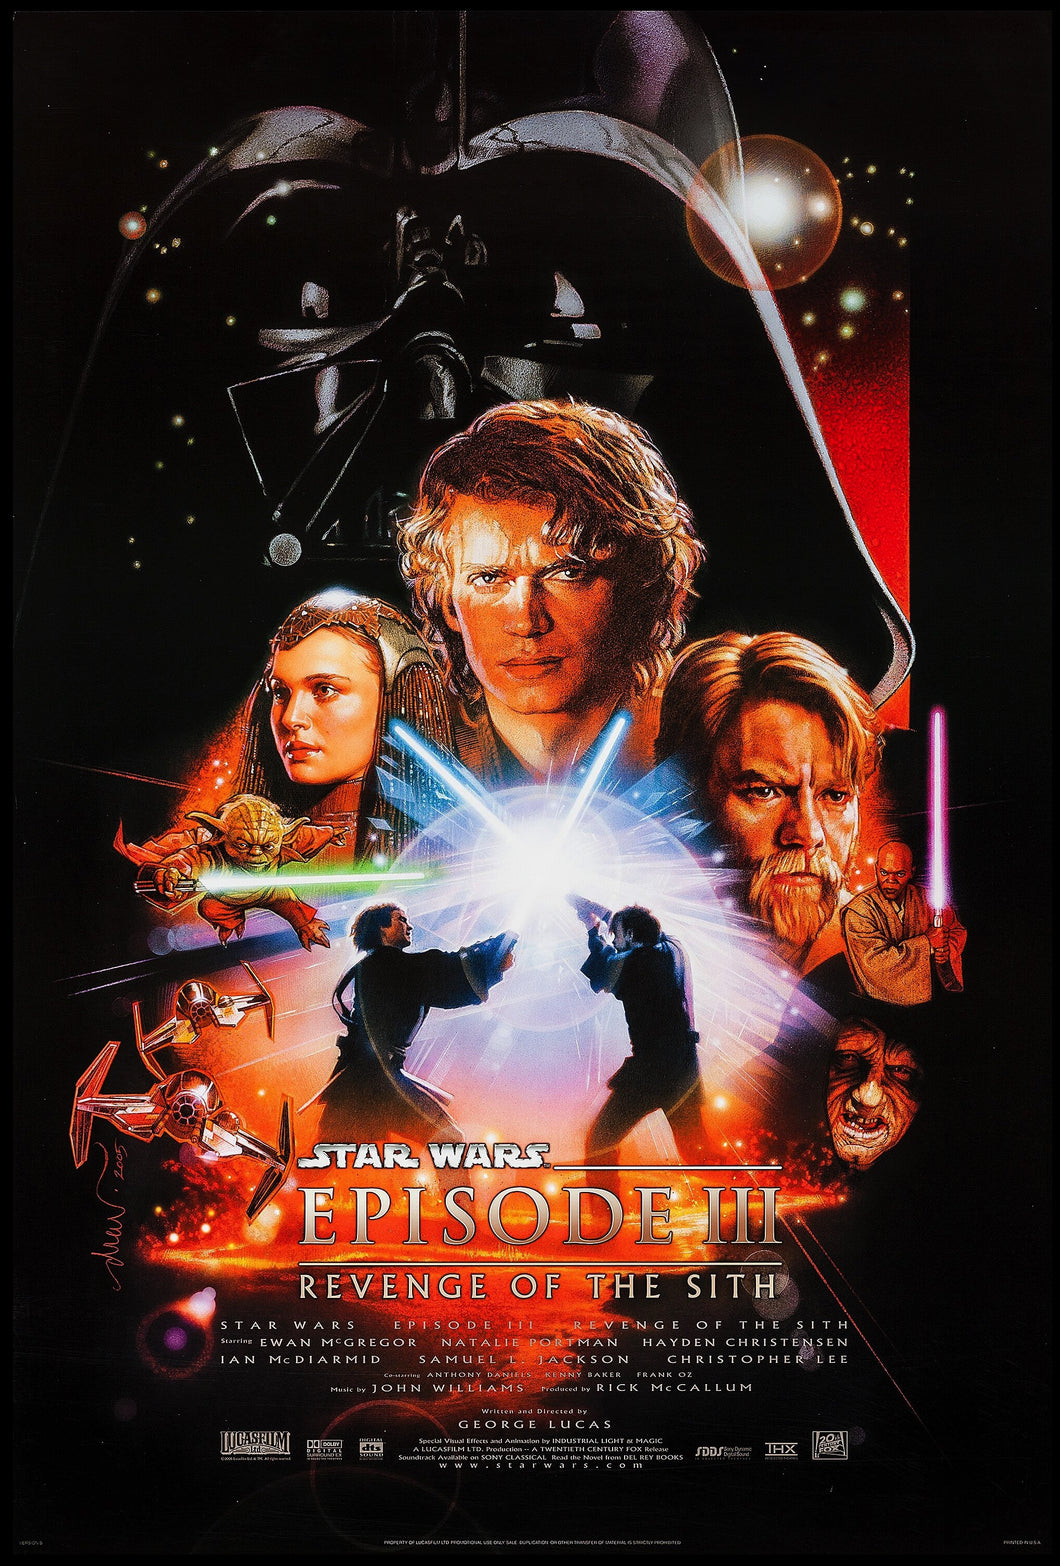 Poster Pelicula Star Wars Episode III: Revenge of the Sith